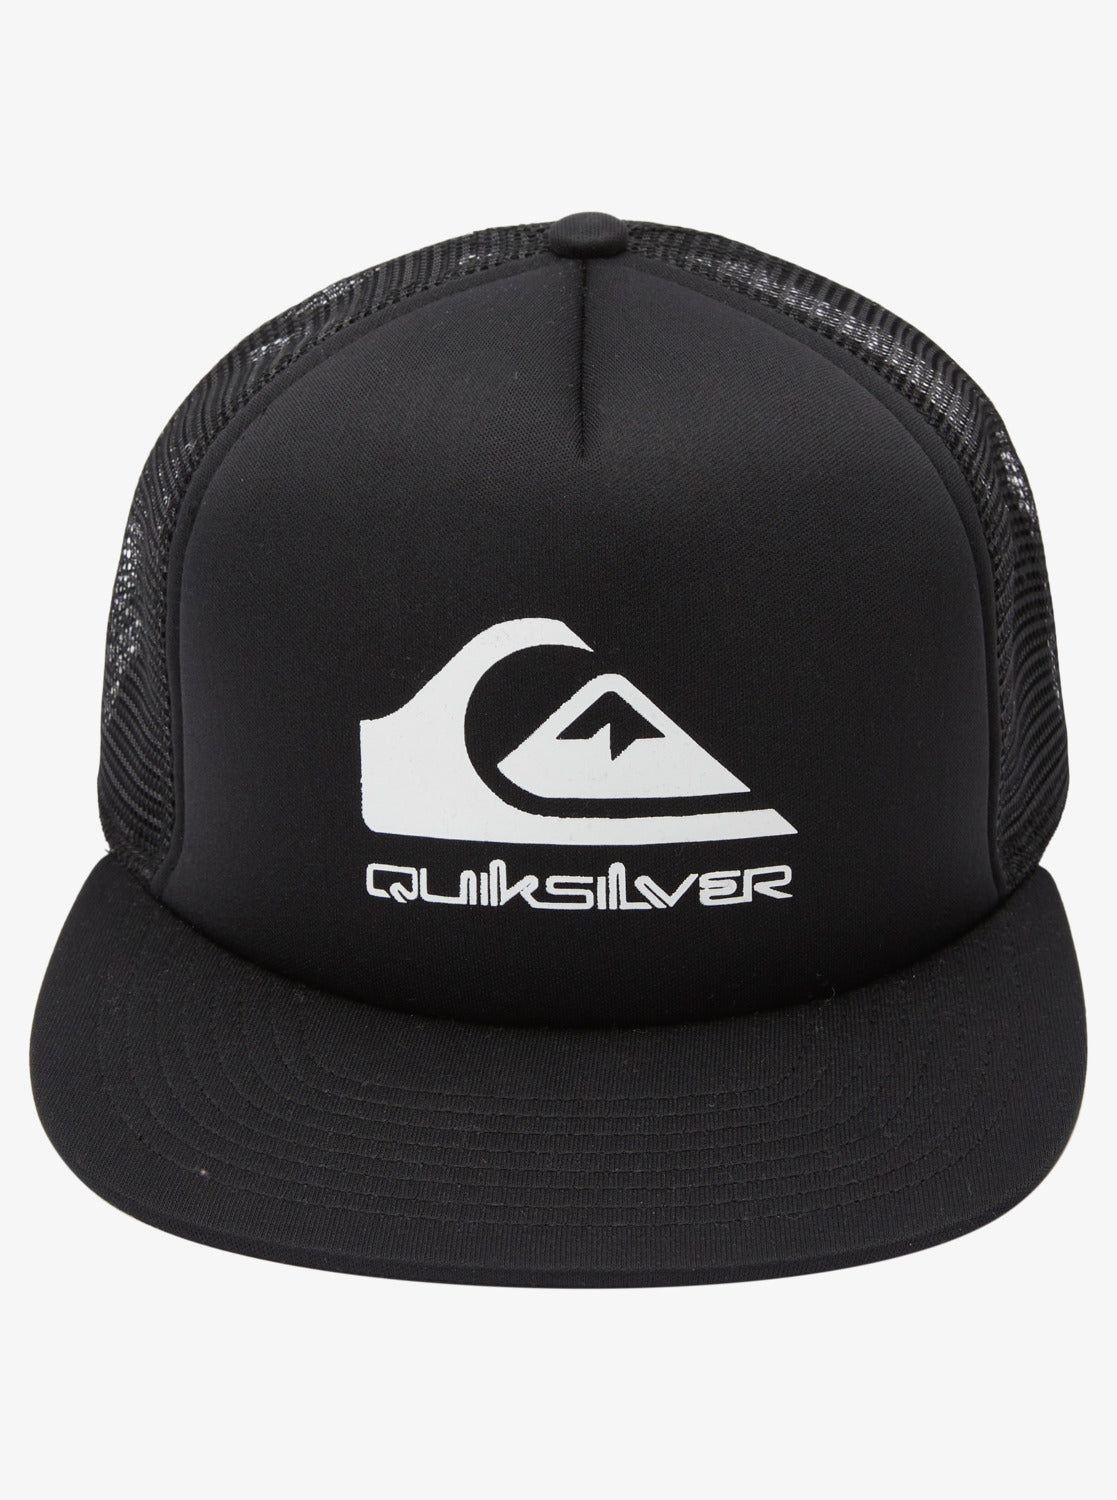 Quiksilver Foamslayer Trucker Cap in Black